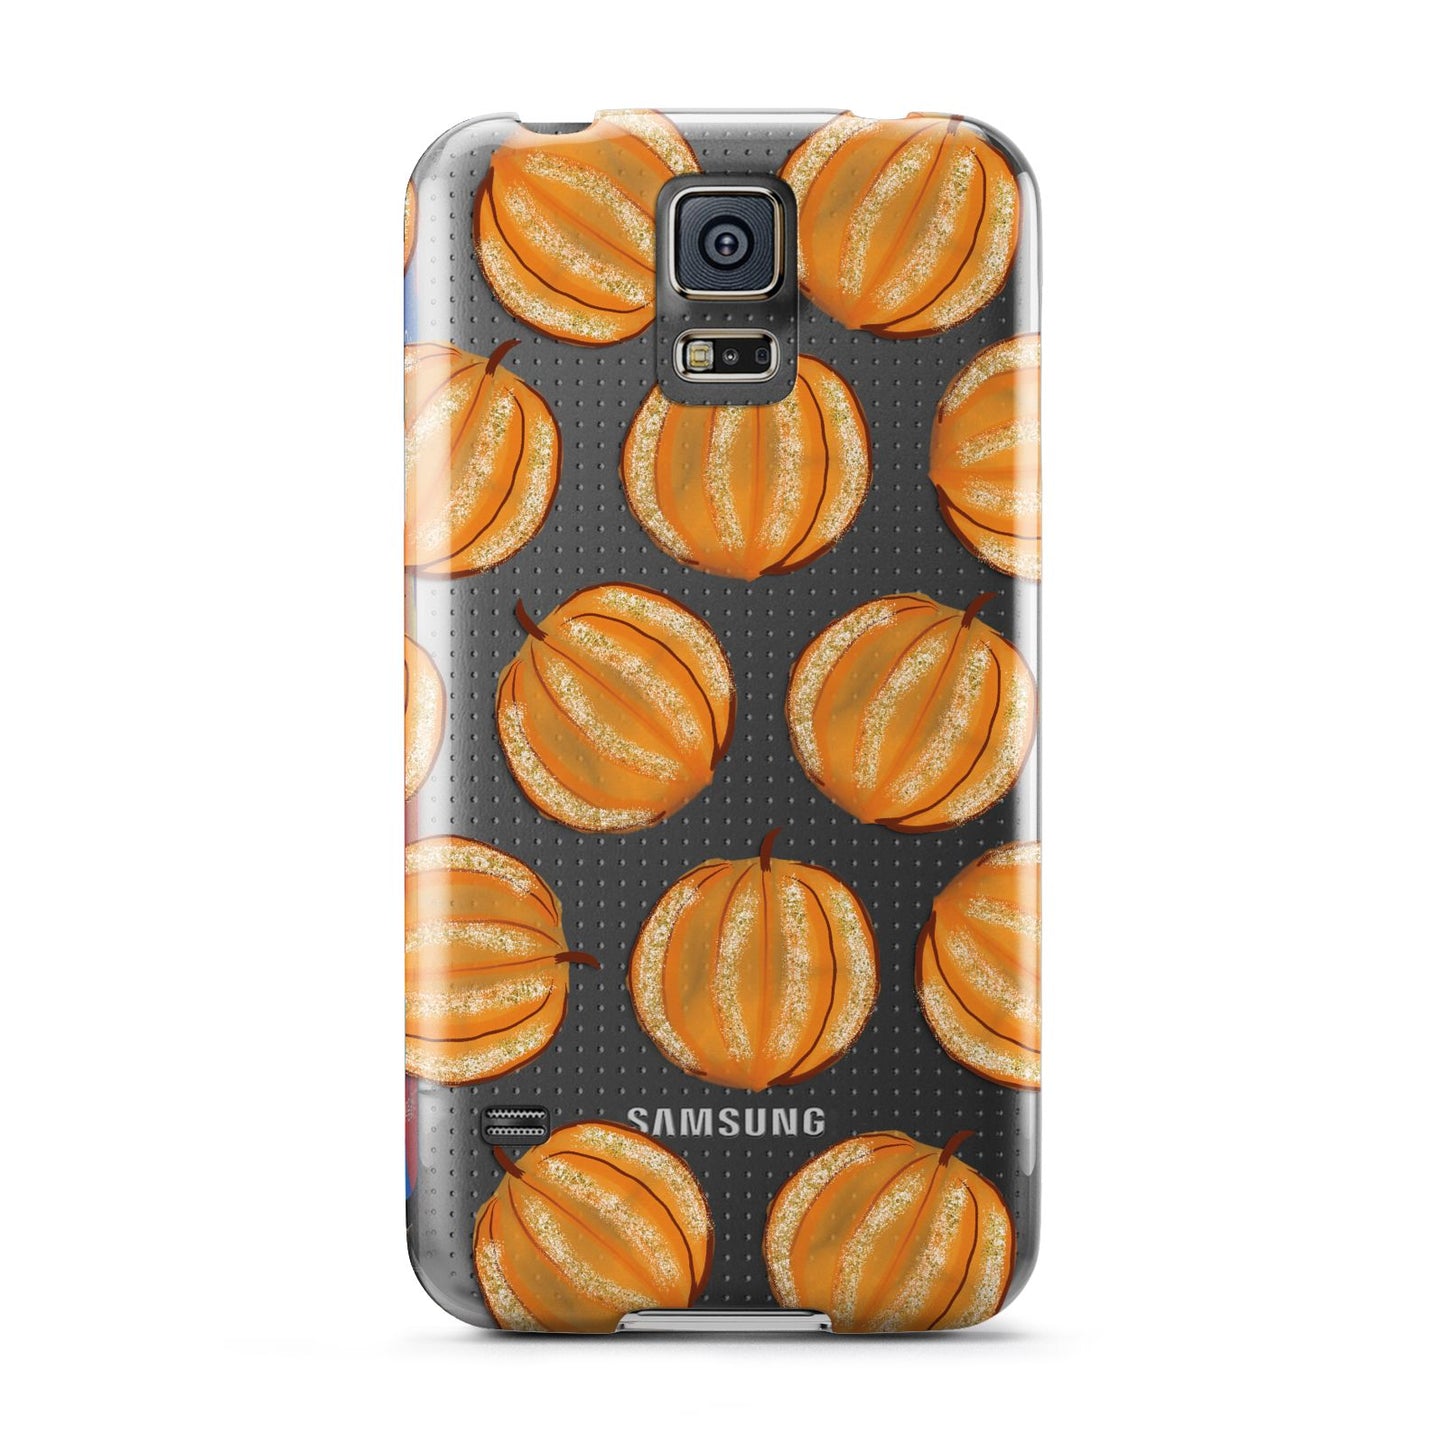 Pumpkin Halloween Samsung Galaxy S5 Case